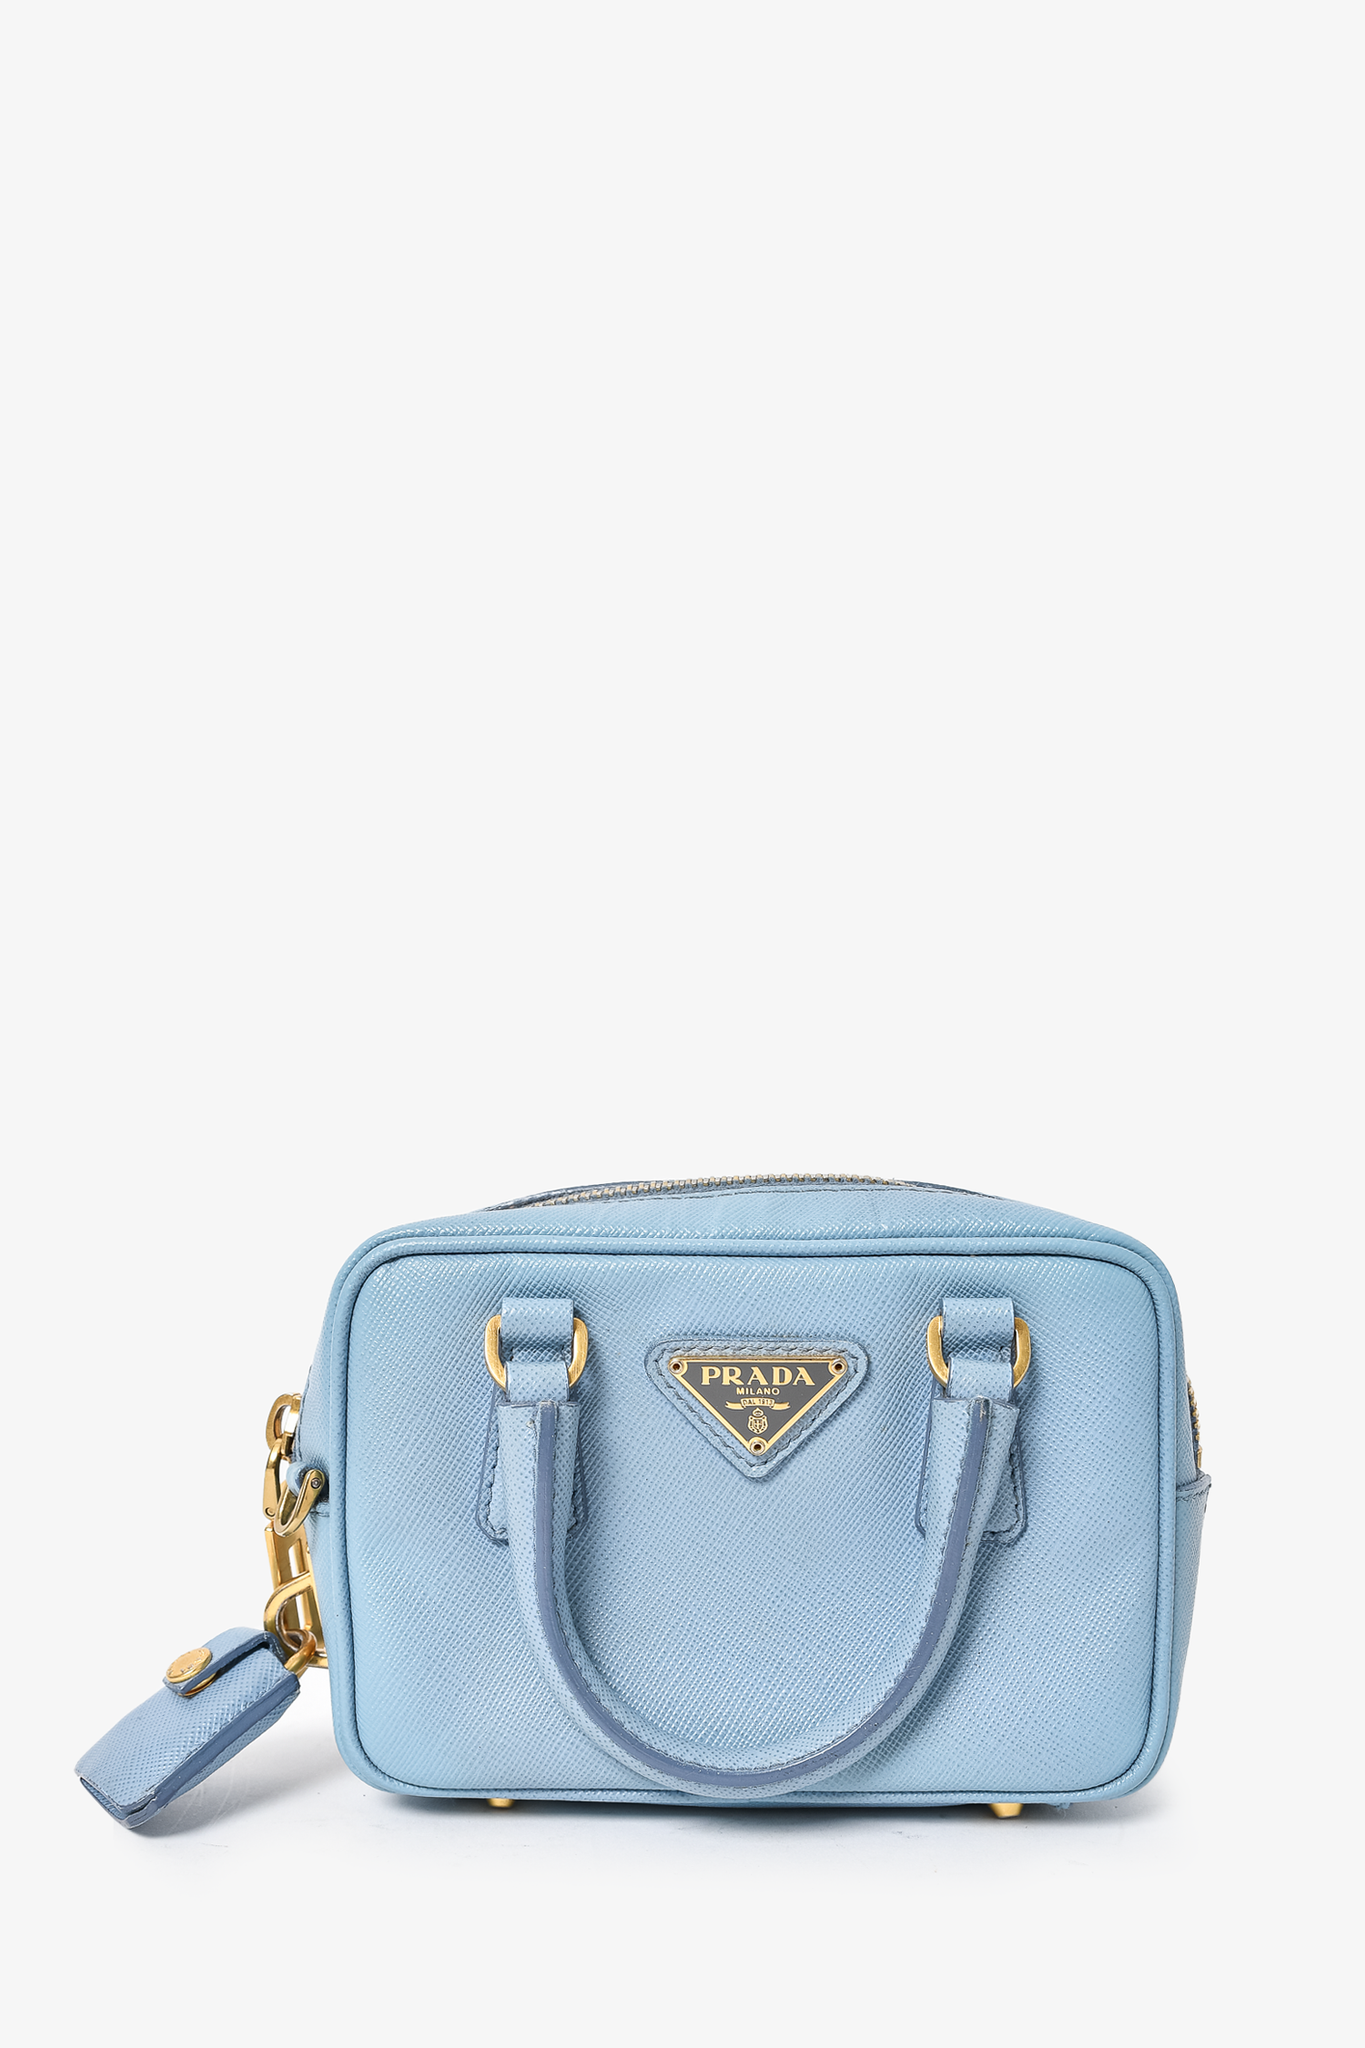 Prada Saffiano Leather Mini Shoulder Bag in Blue